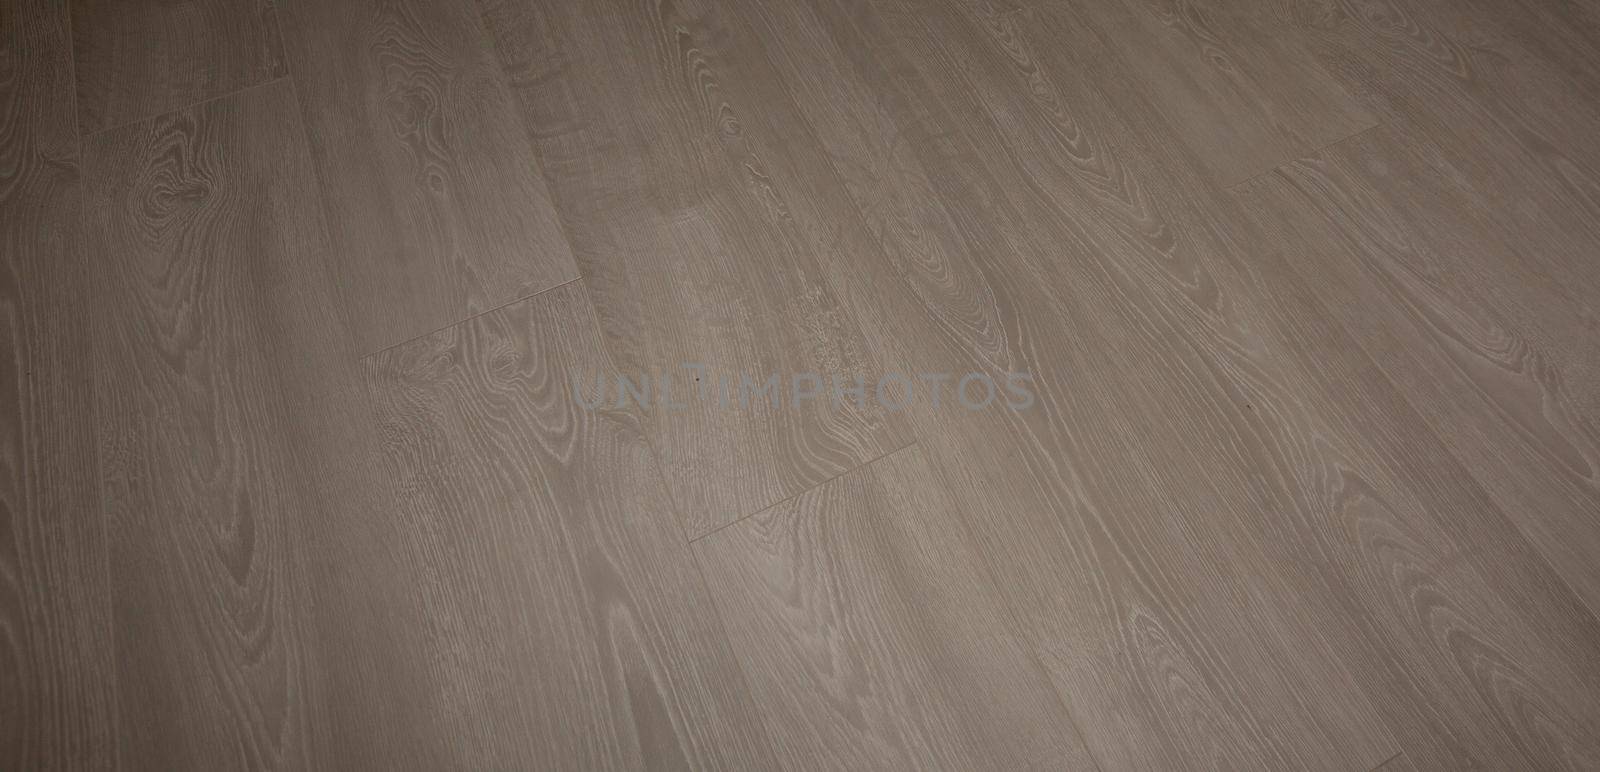 White wooden parquet flooring texture. Horizontal seamless wooden background.